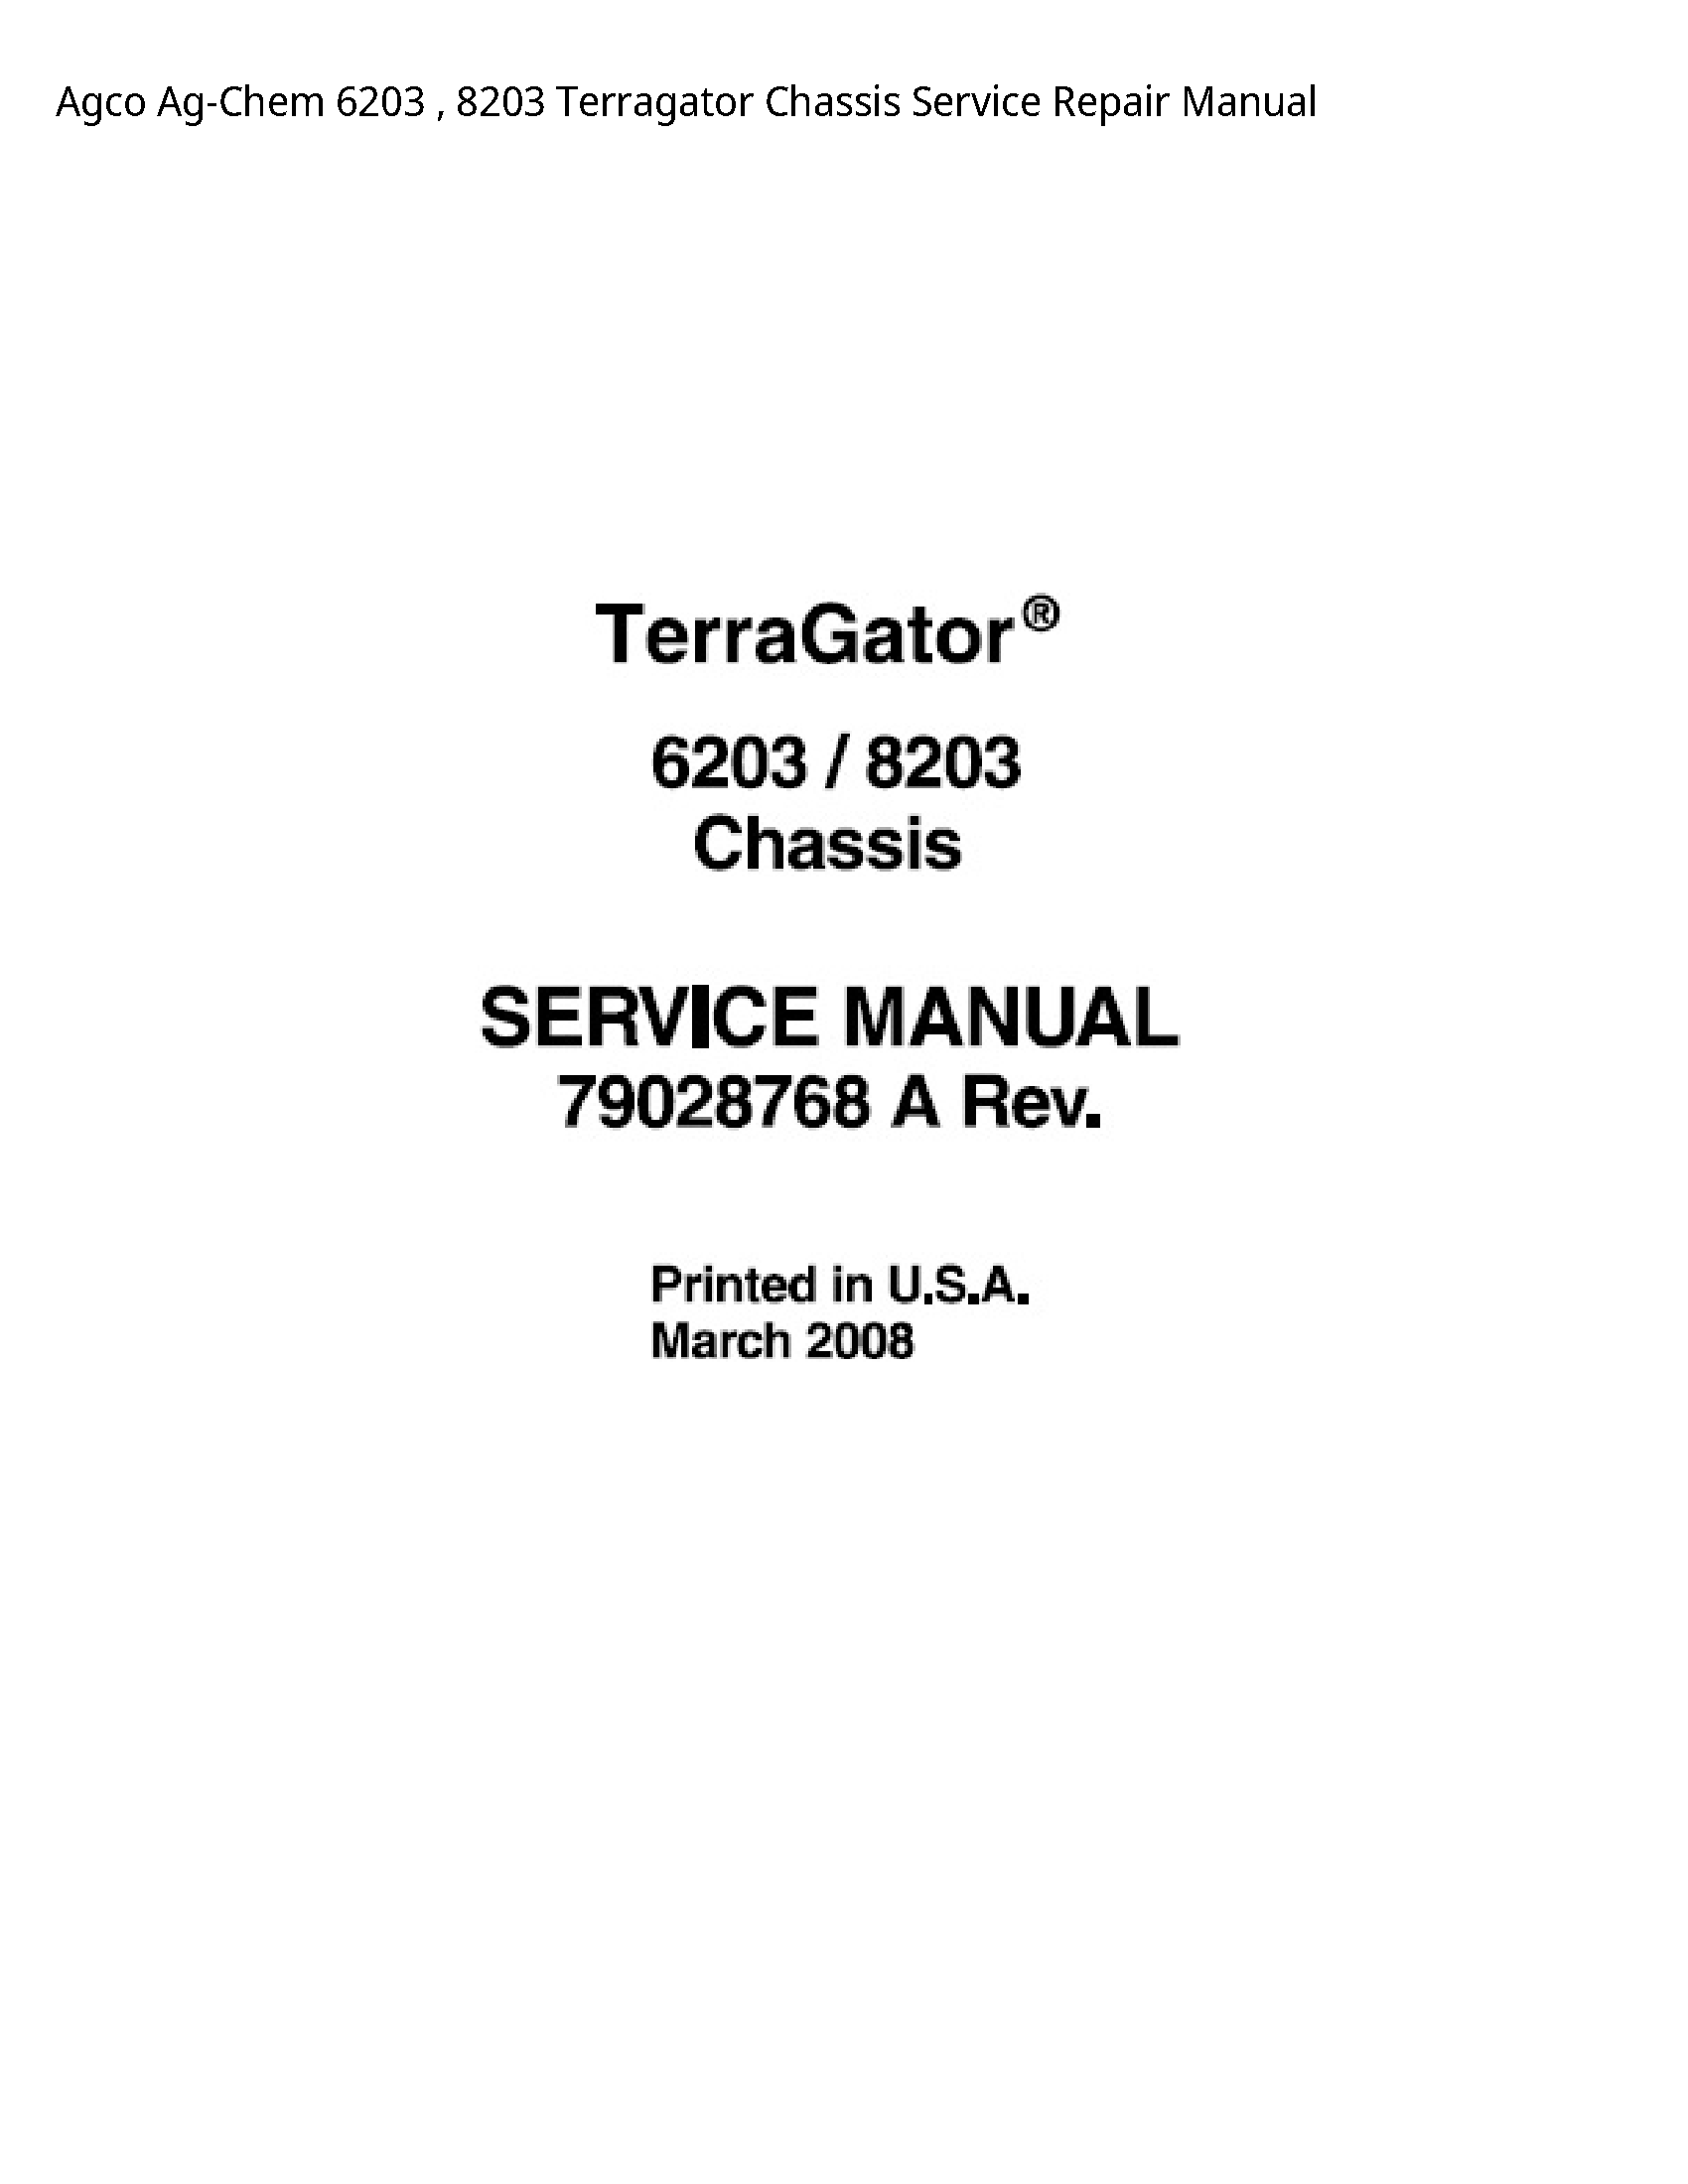 AGCO 6203 Ag-Chem Terragator Chassis manual